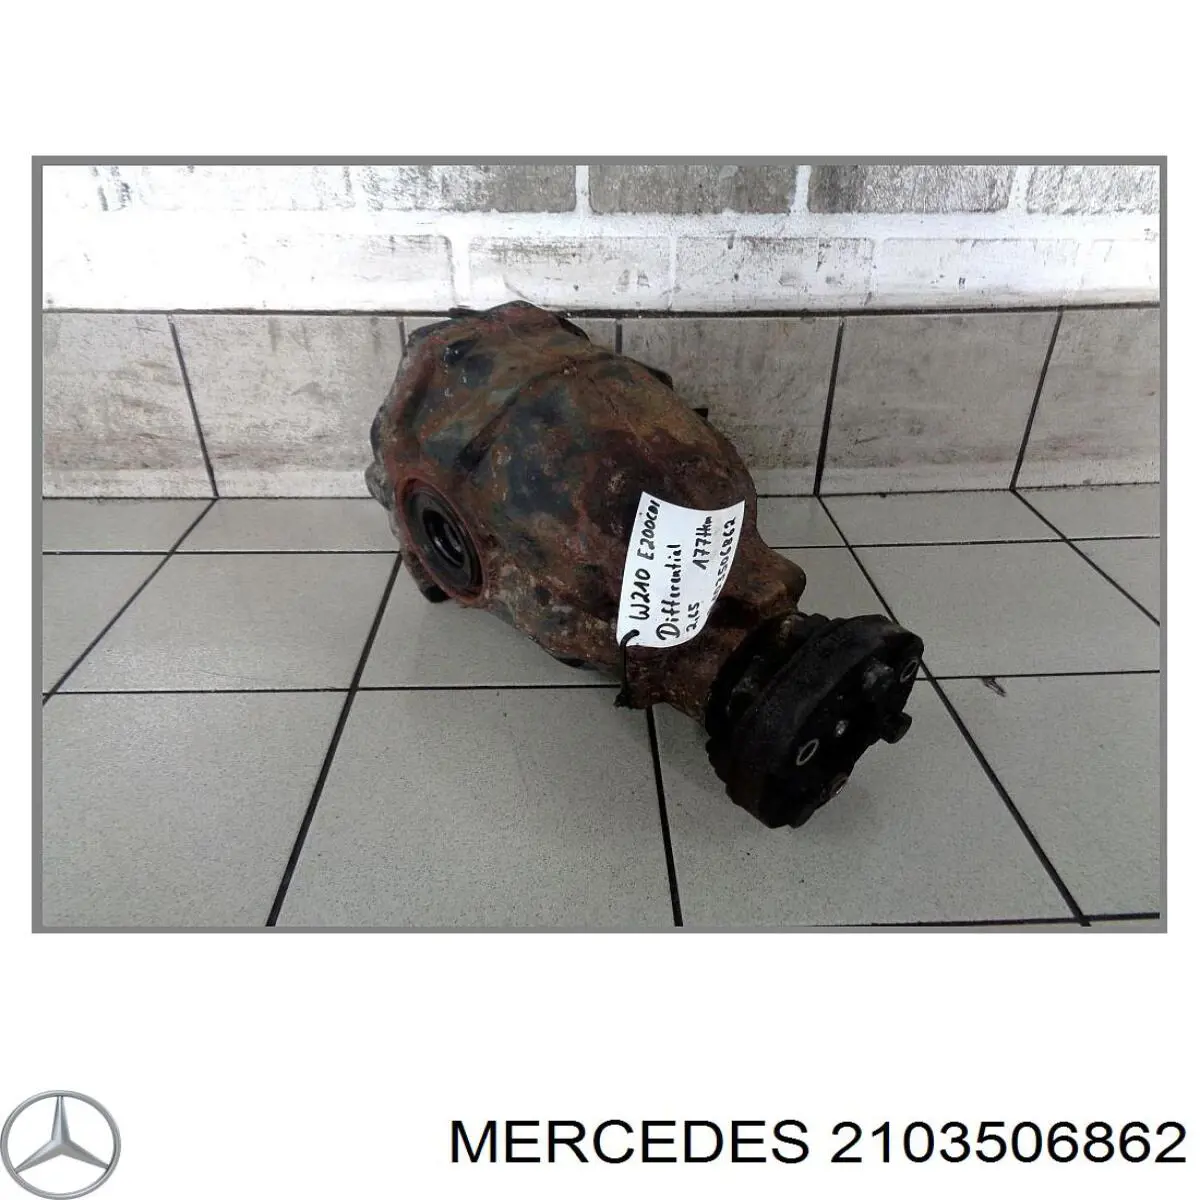 A2103506862 Mercedes diferencial eje trasero